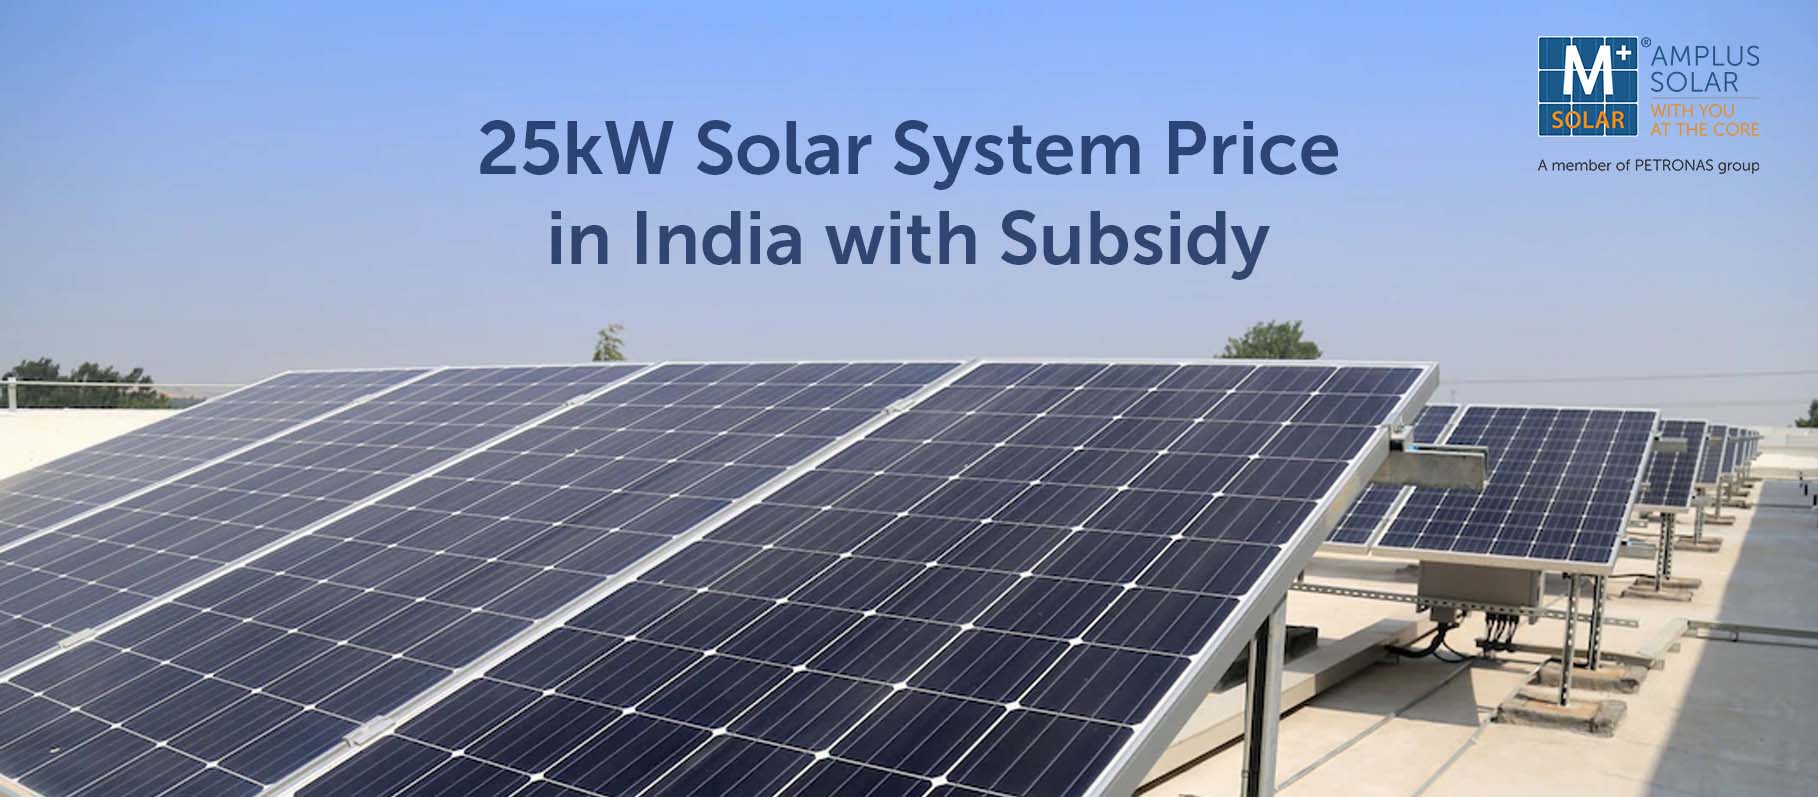 25kW Solar System Price in India